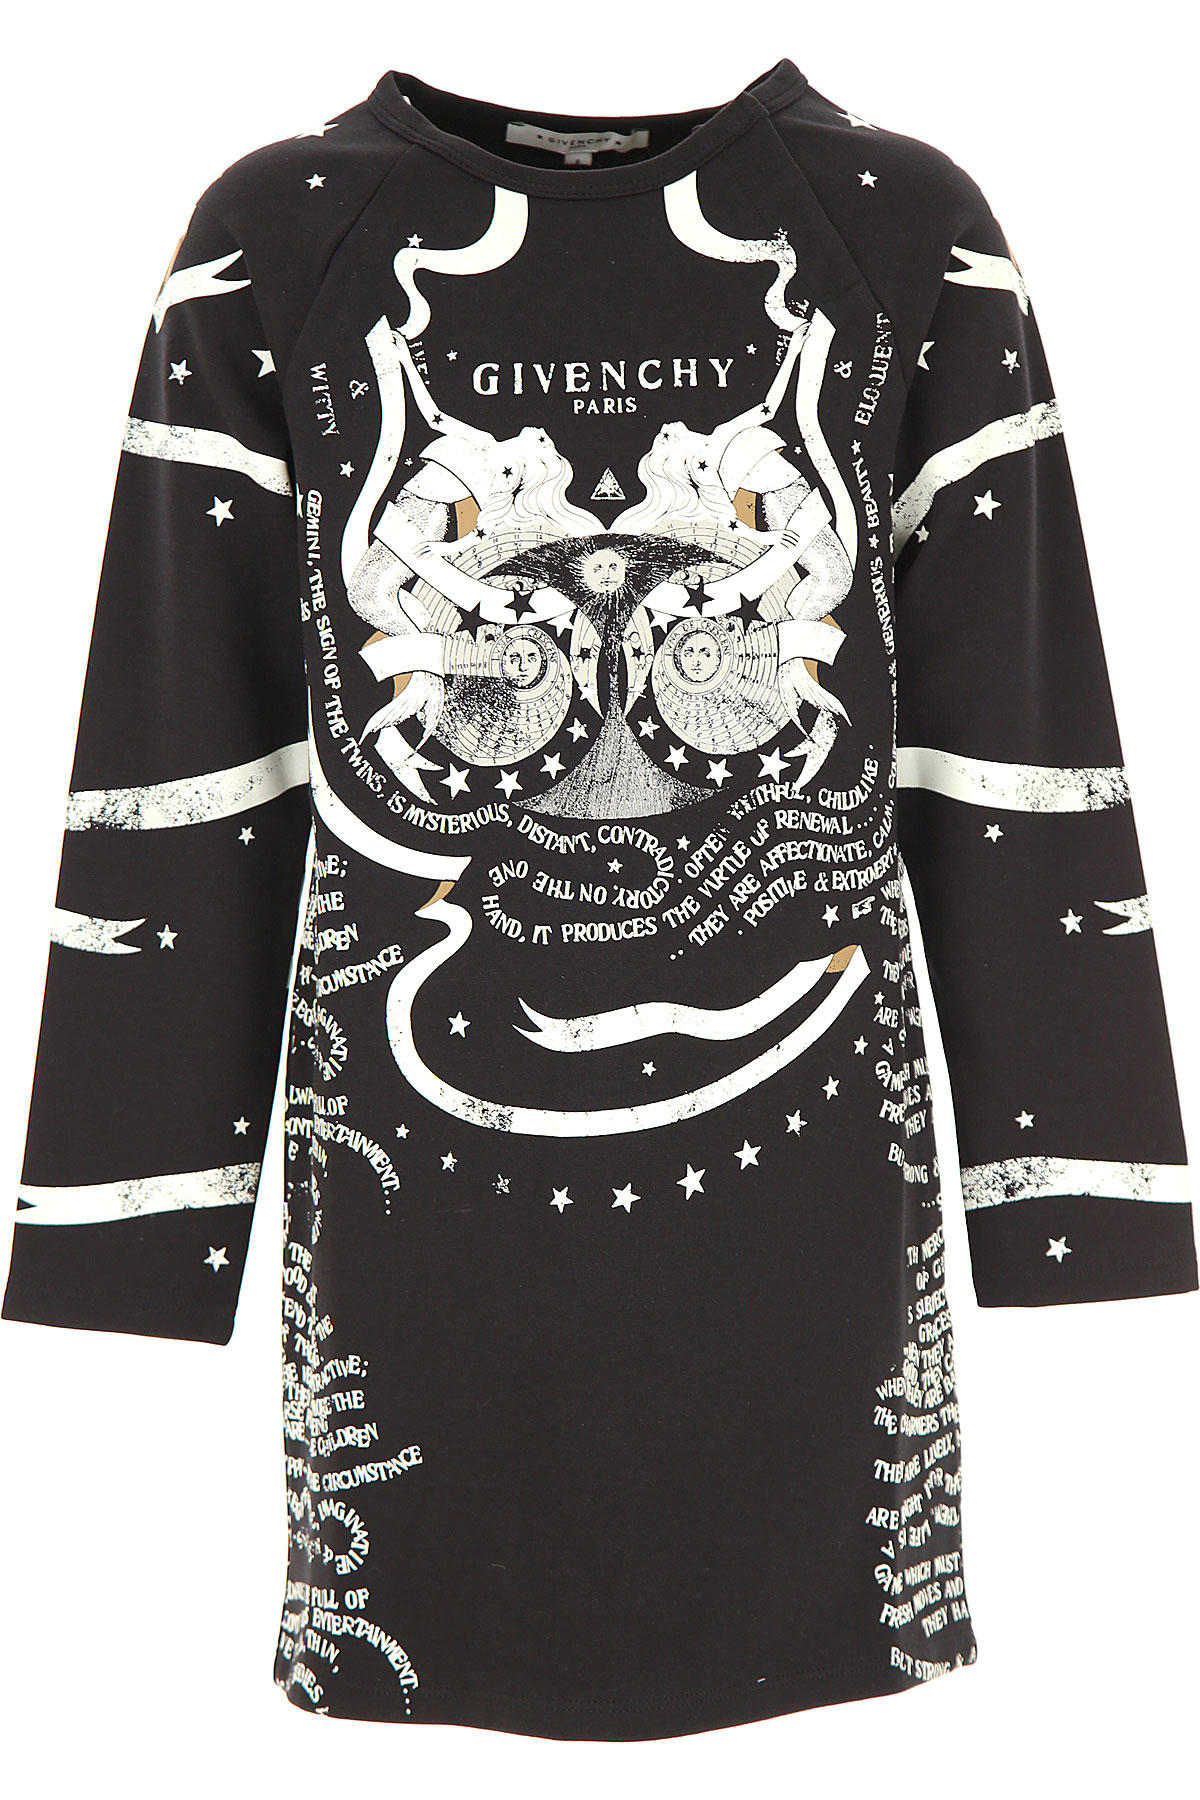 Girls Clothing Givenchy, Style code: h12102-09b-